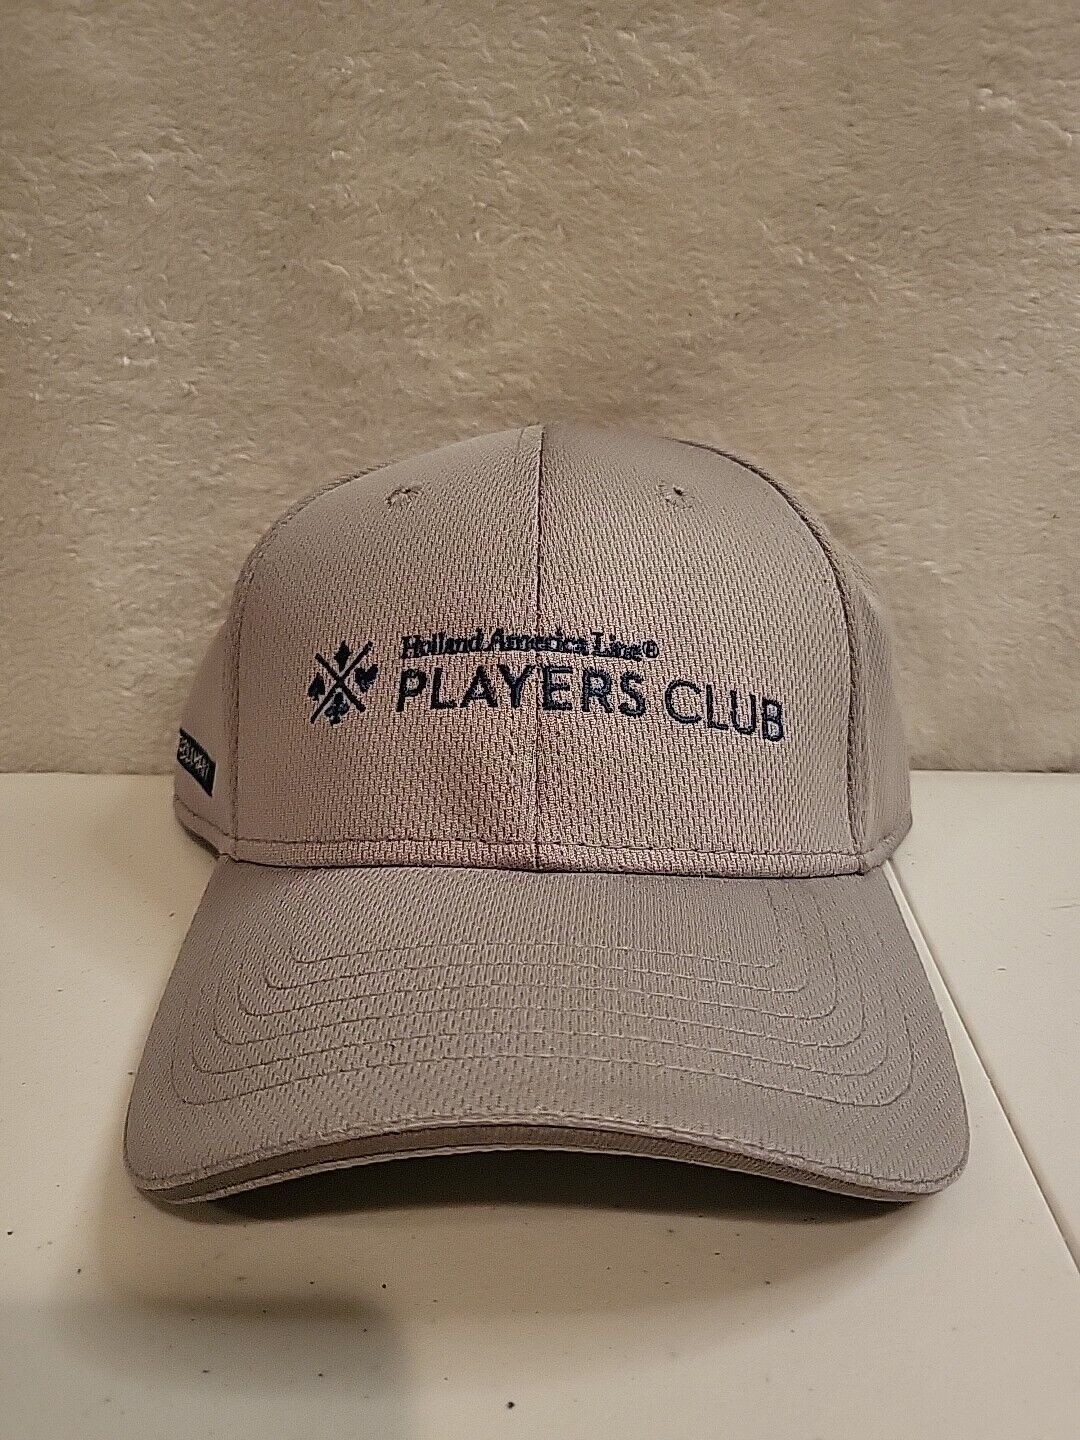 Holland America Line Players Club Casino Tournament Hat